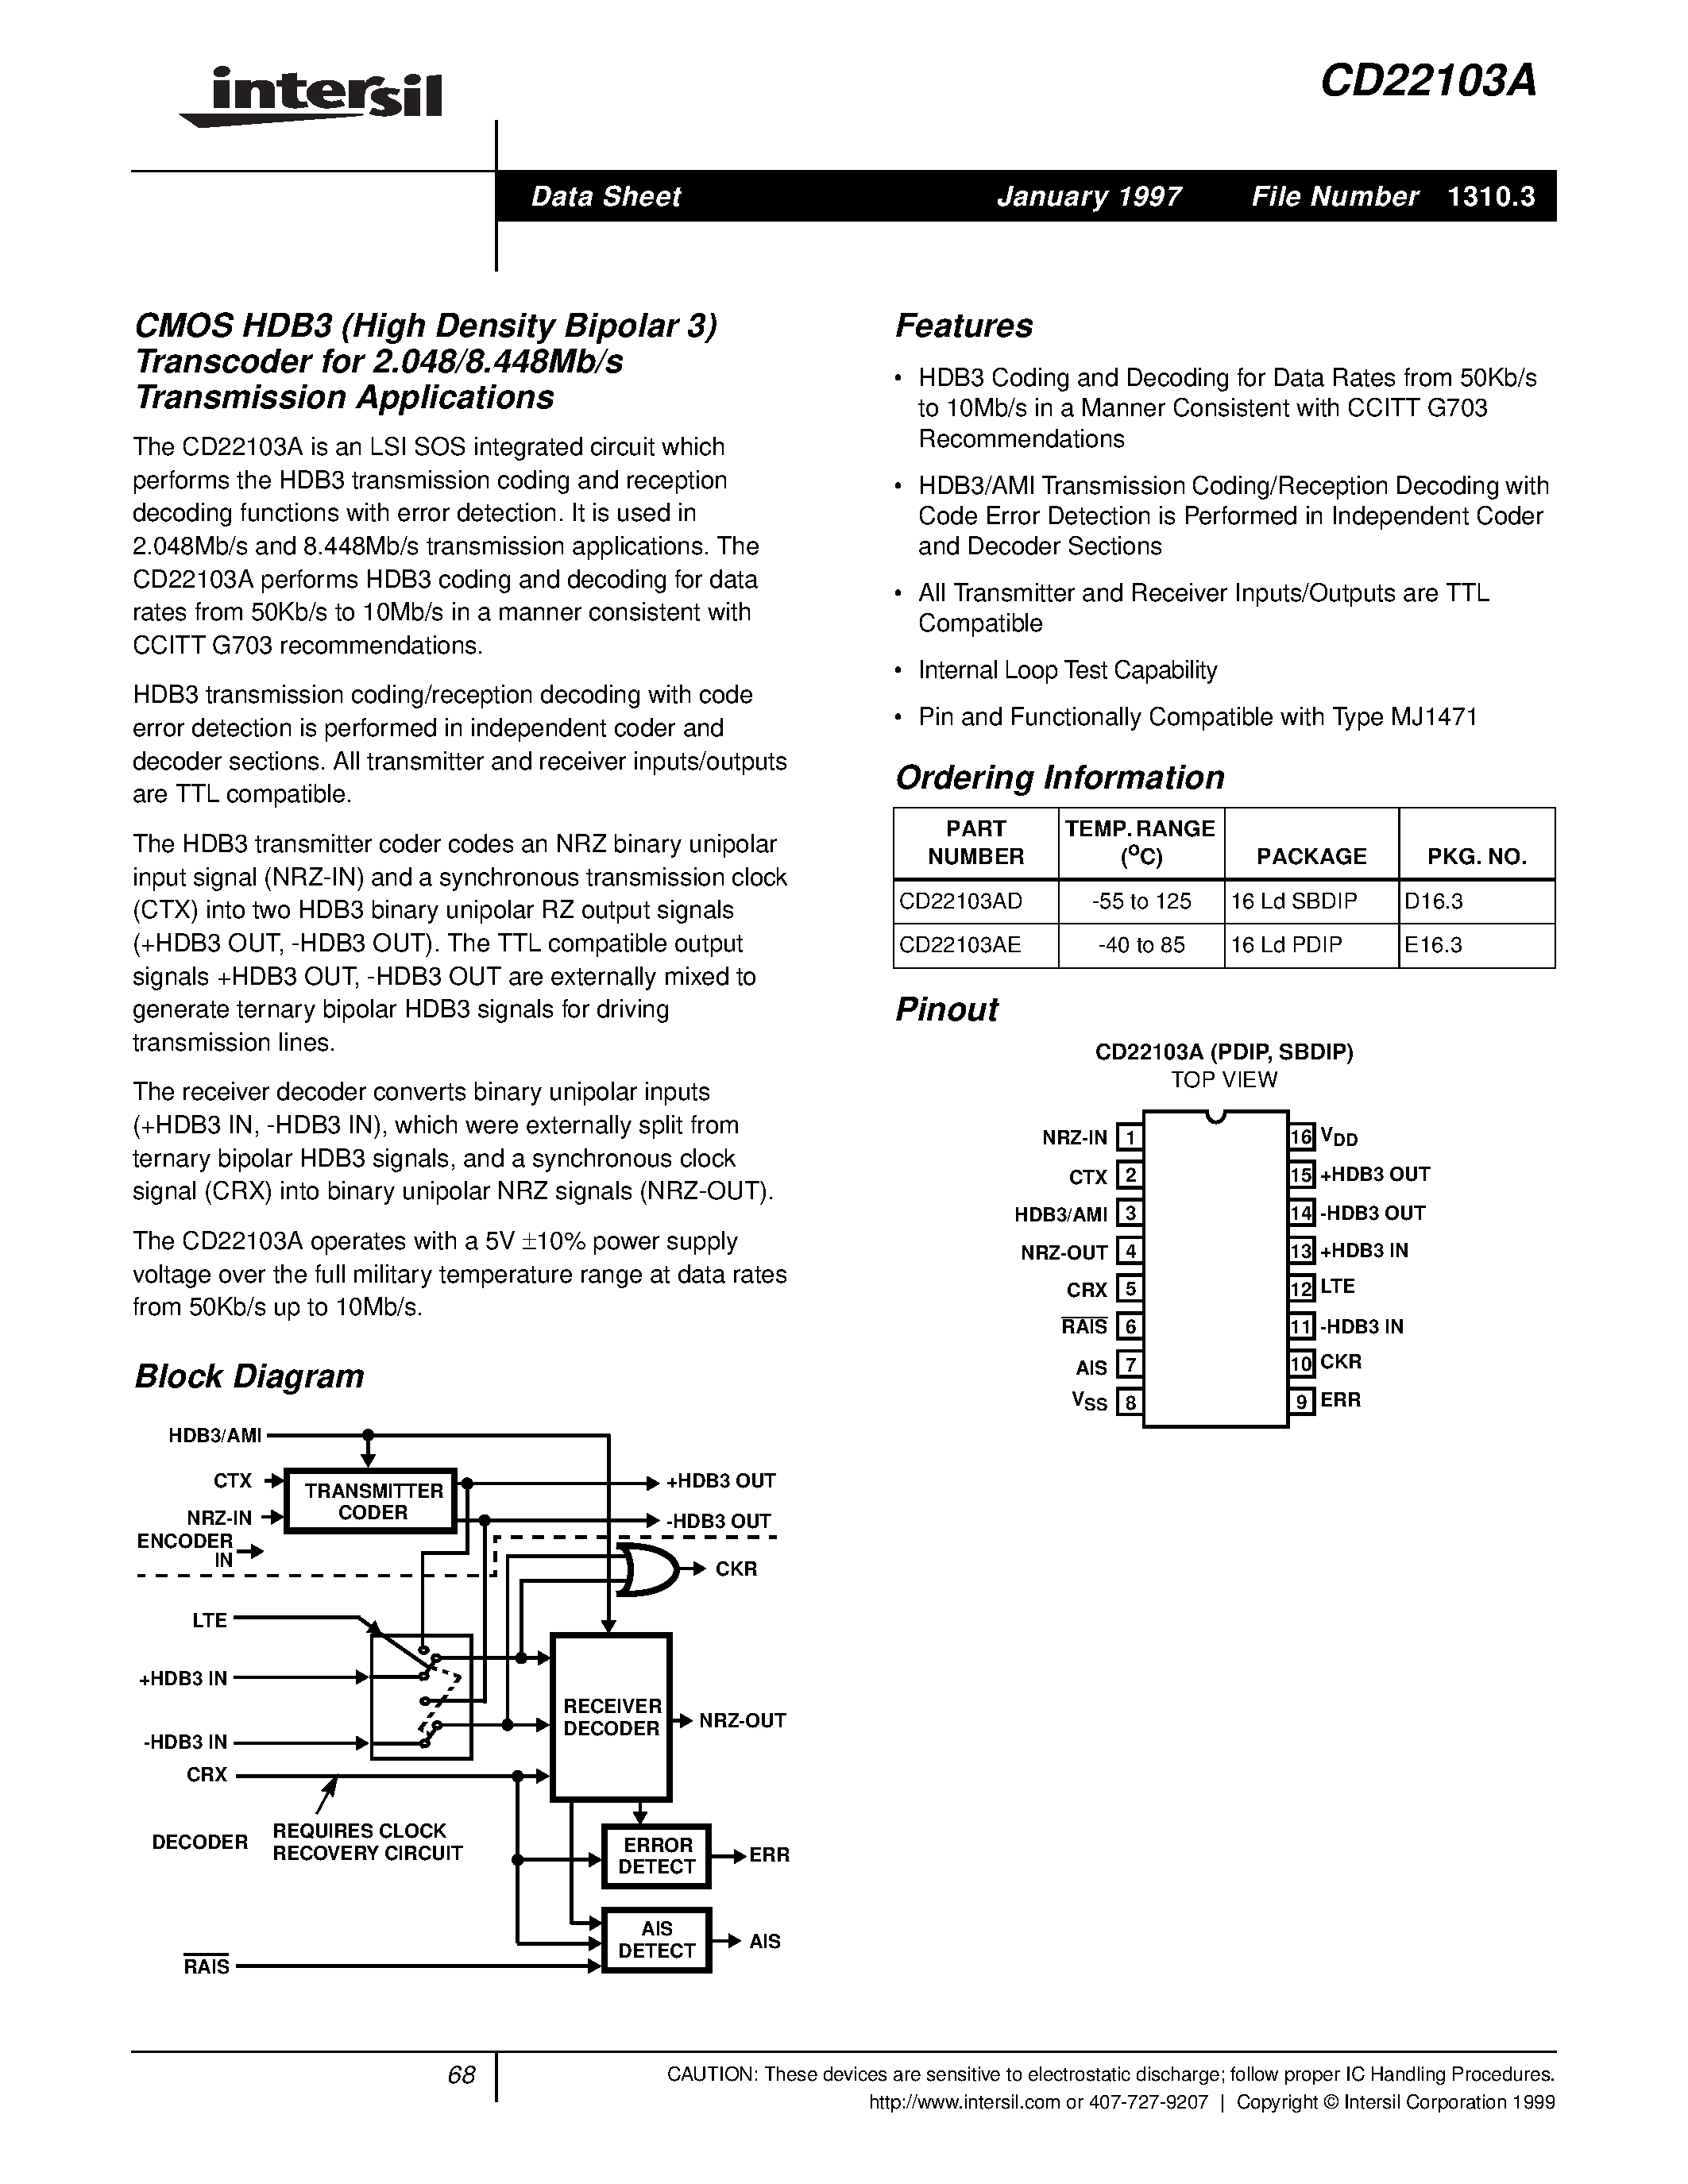 Datasheet CD22103AE - CMOS HDB3 High Density Bipolar 3 Transcoder for 2.048/8.448Mb/s Transmission Applications page 1